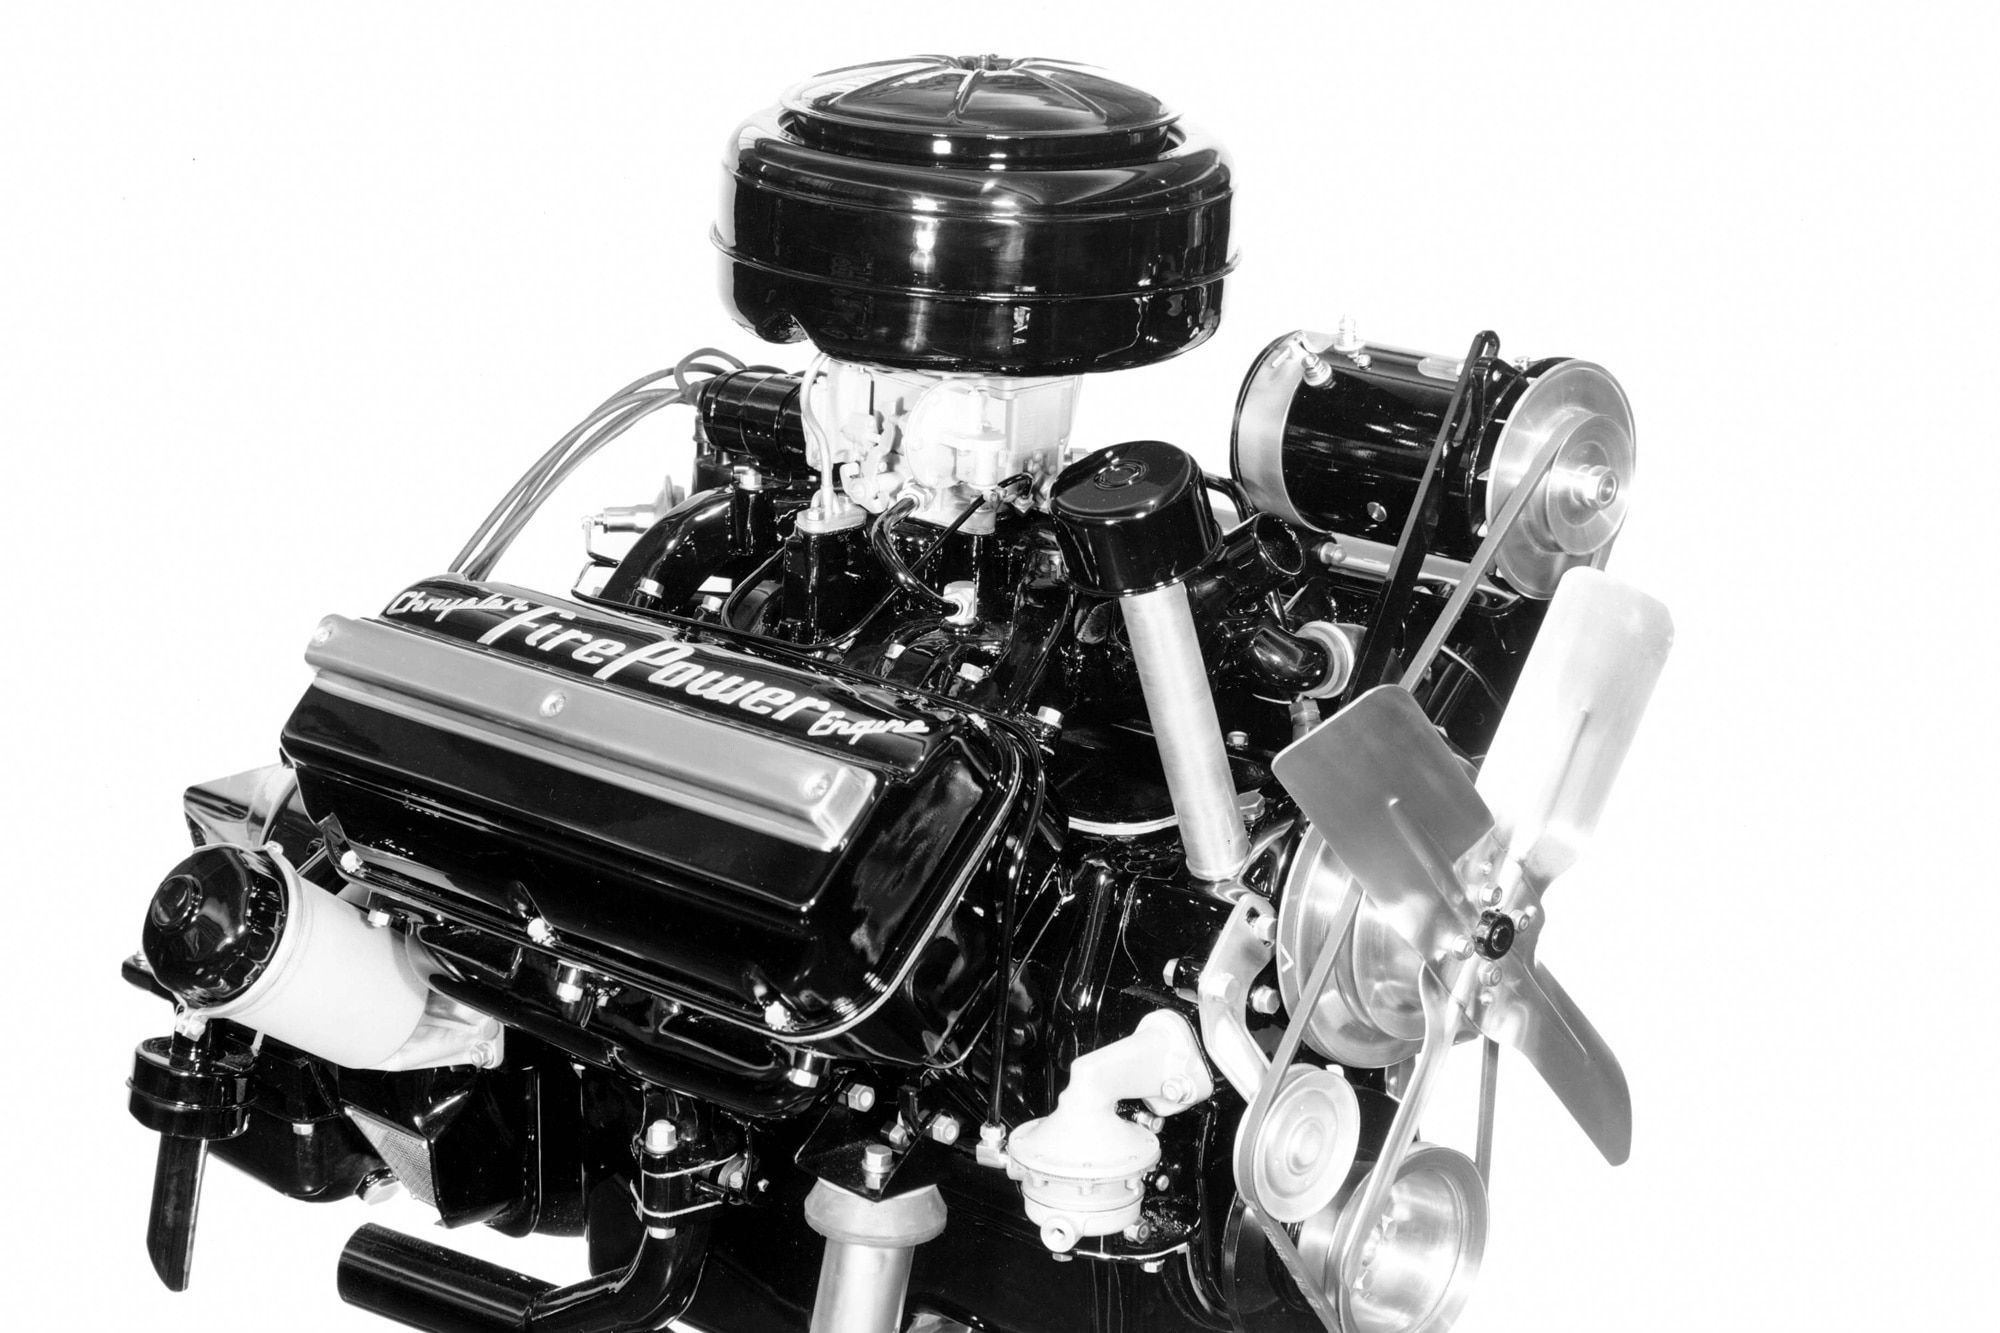 Chrysler FirePower engine